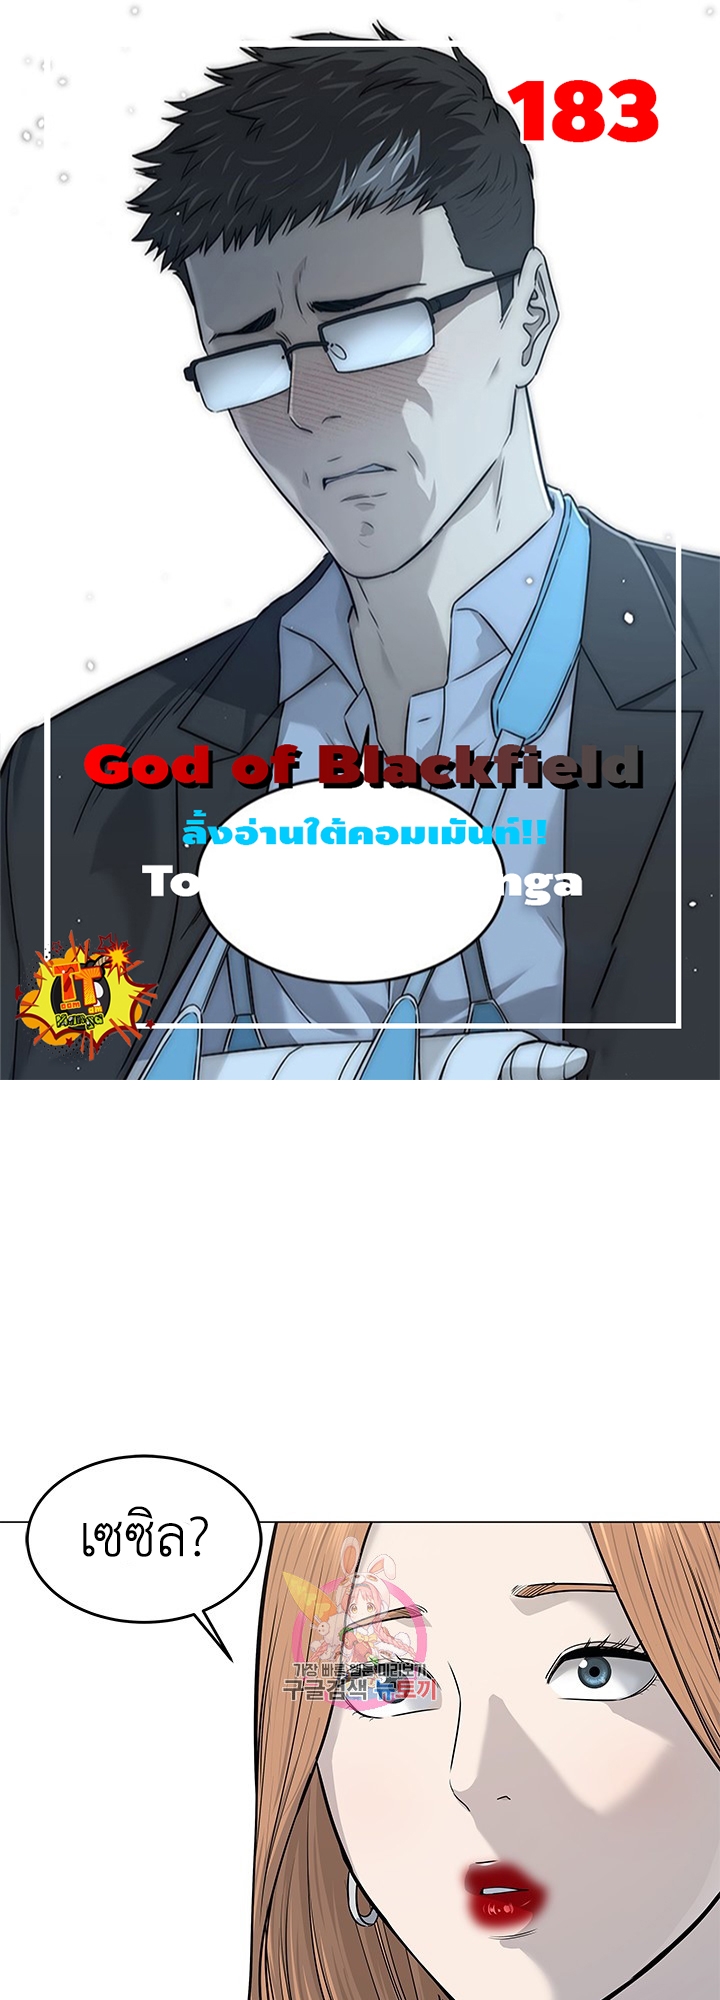 God of Blackfield 183 6 12 25660001